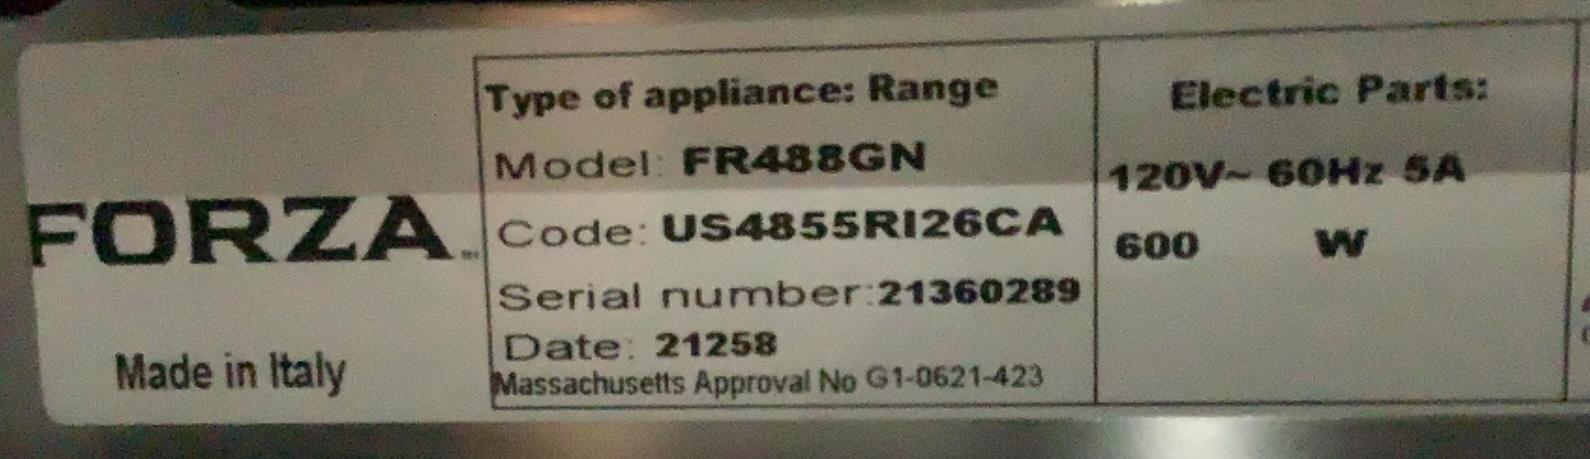 Forza 48" LP/Natural Gas Range FR488GN